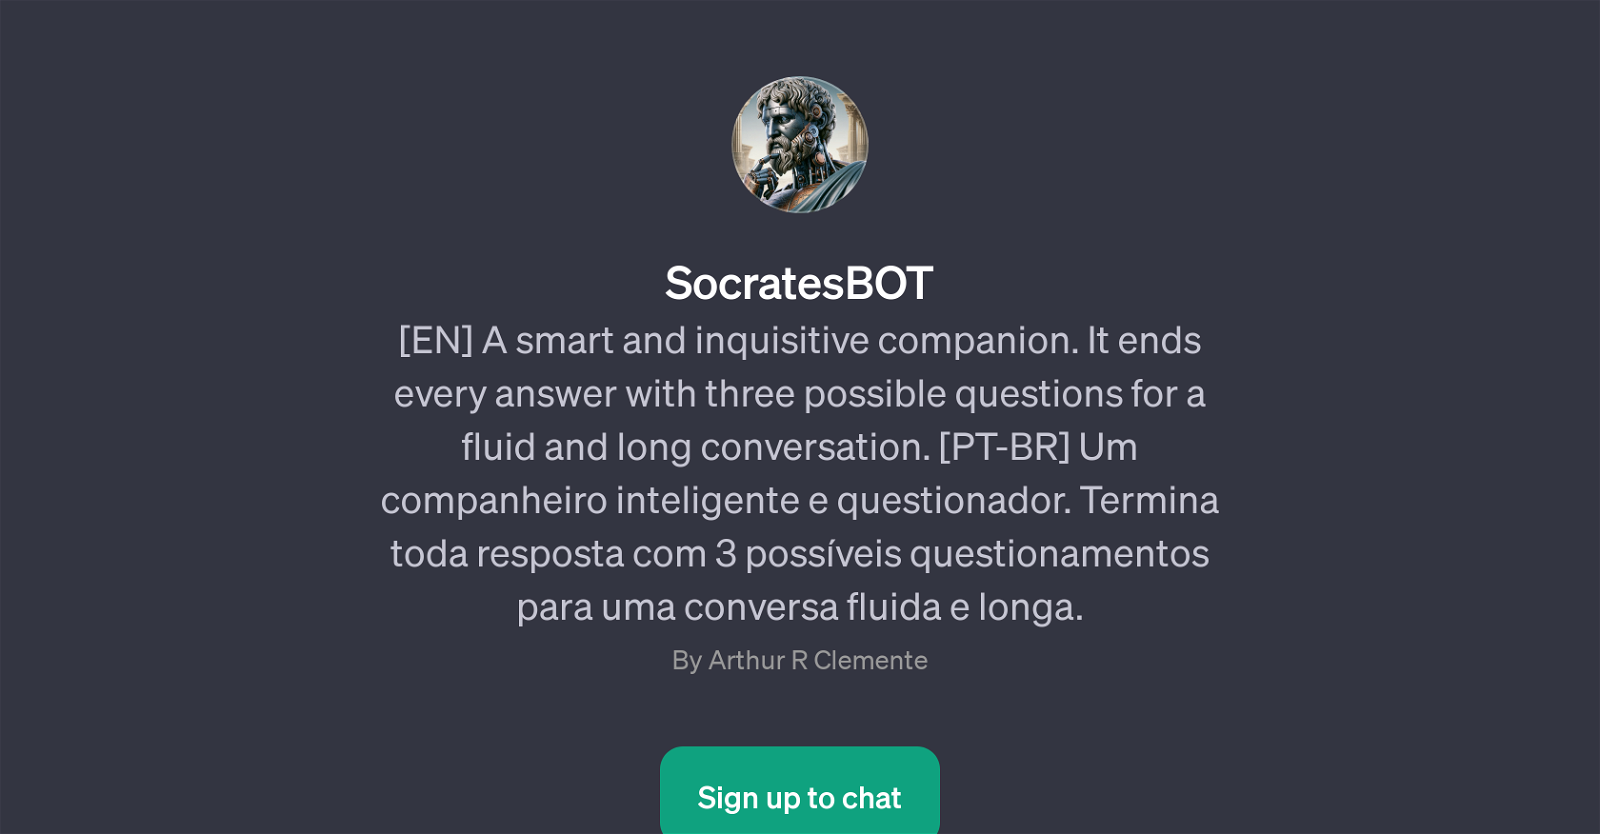 SocratesBOT website